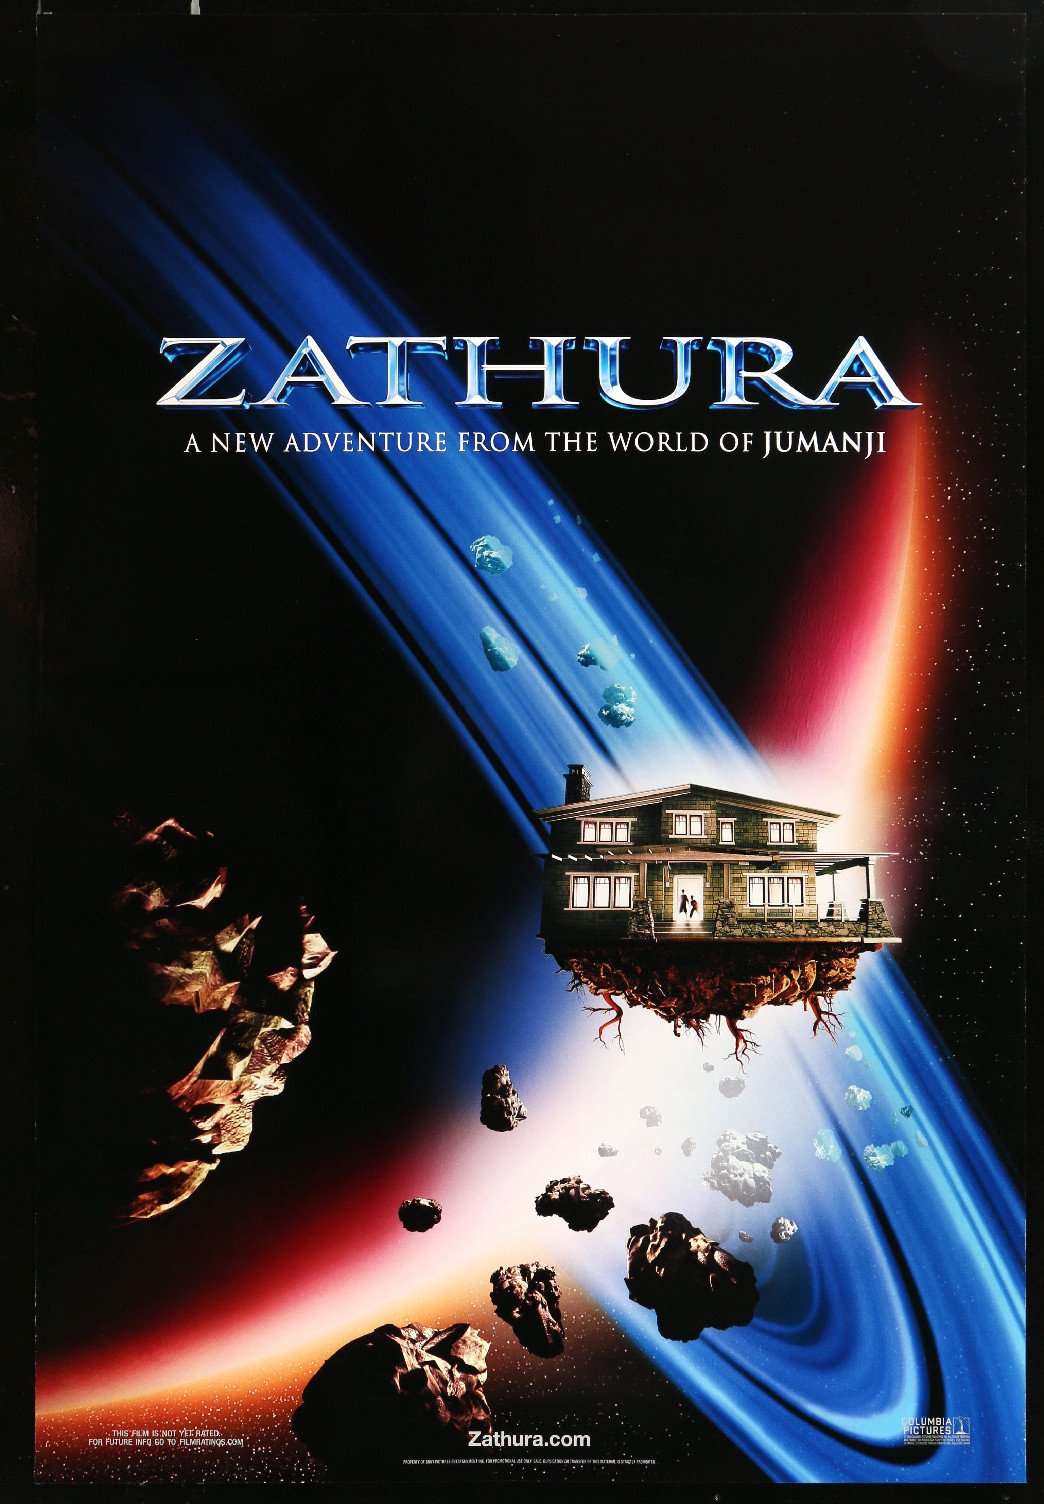 Zathura: A Space Adventure (2005) original movie poster for sale at Original Film Art